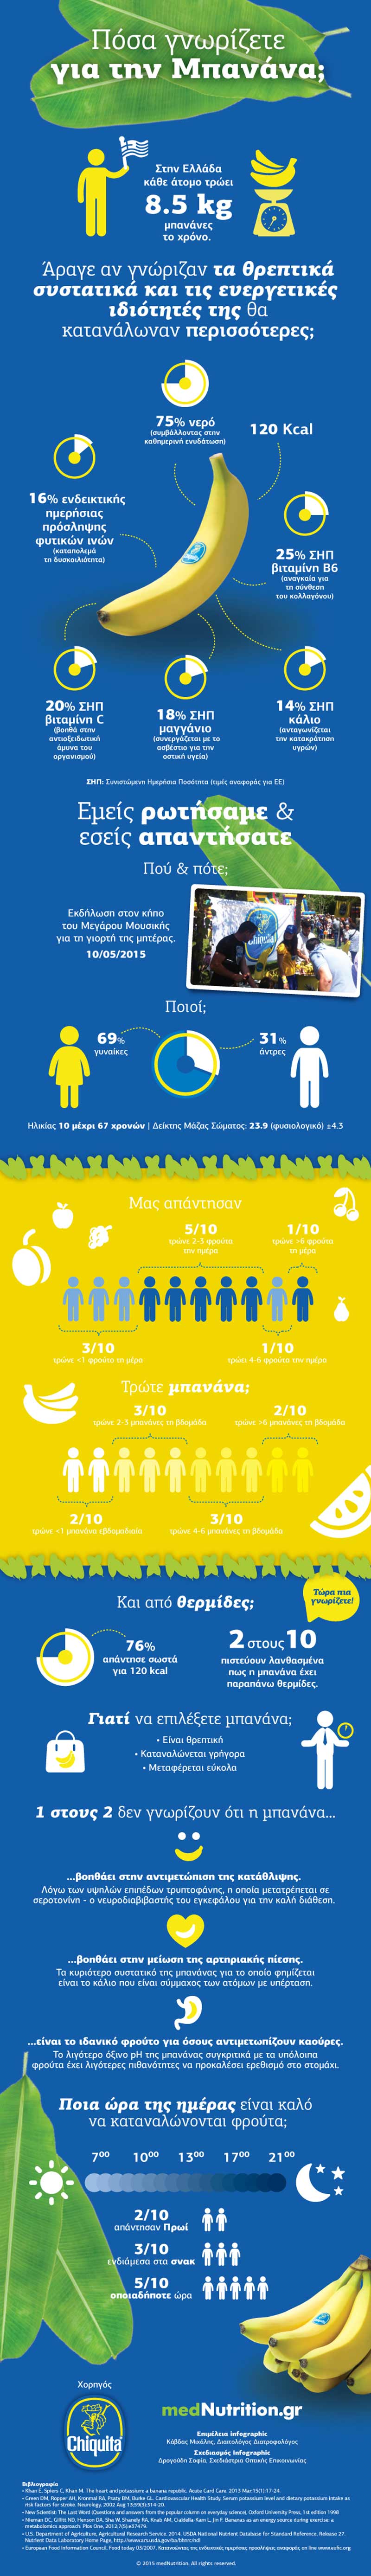 banana infographic